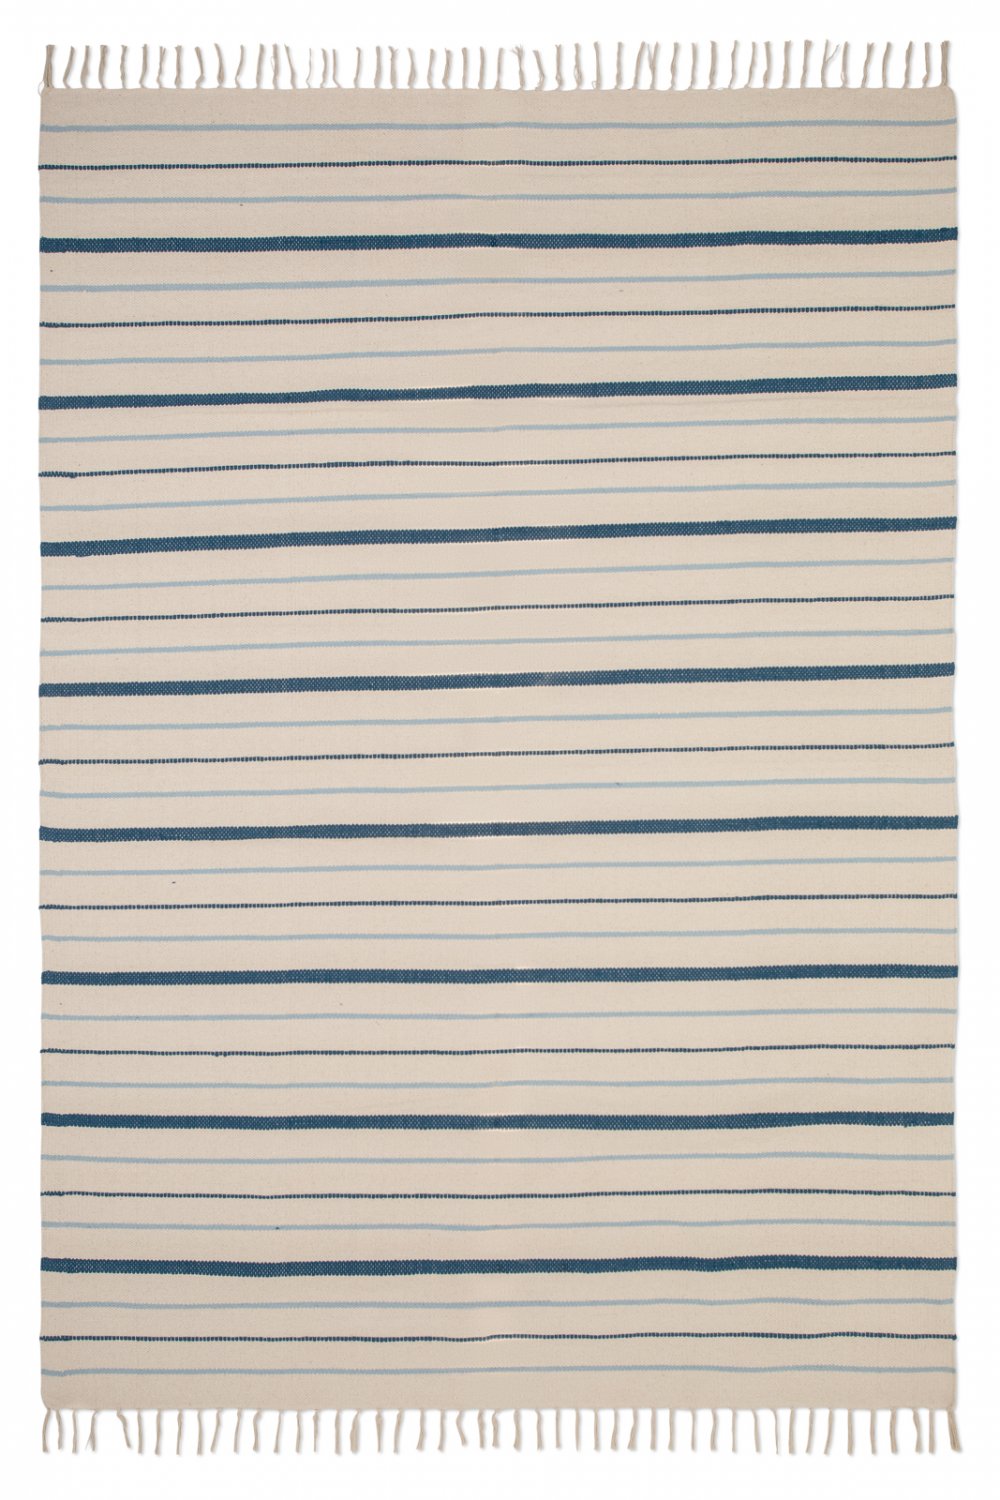 Cotton rug - Boda (white/blue)